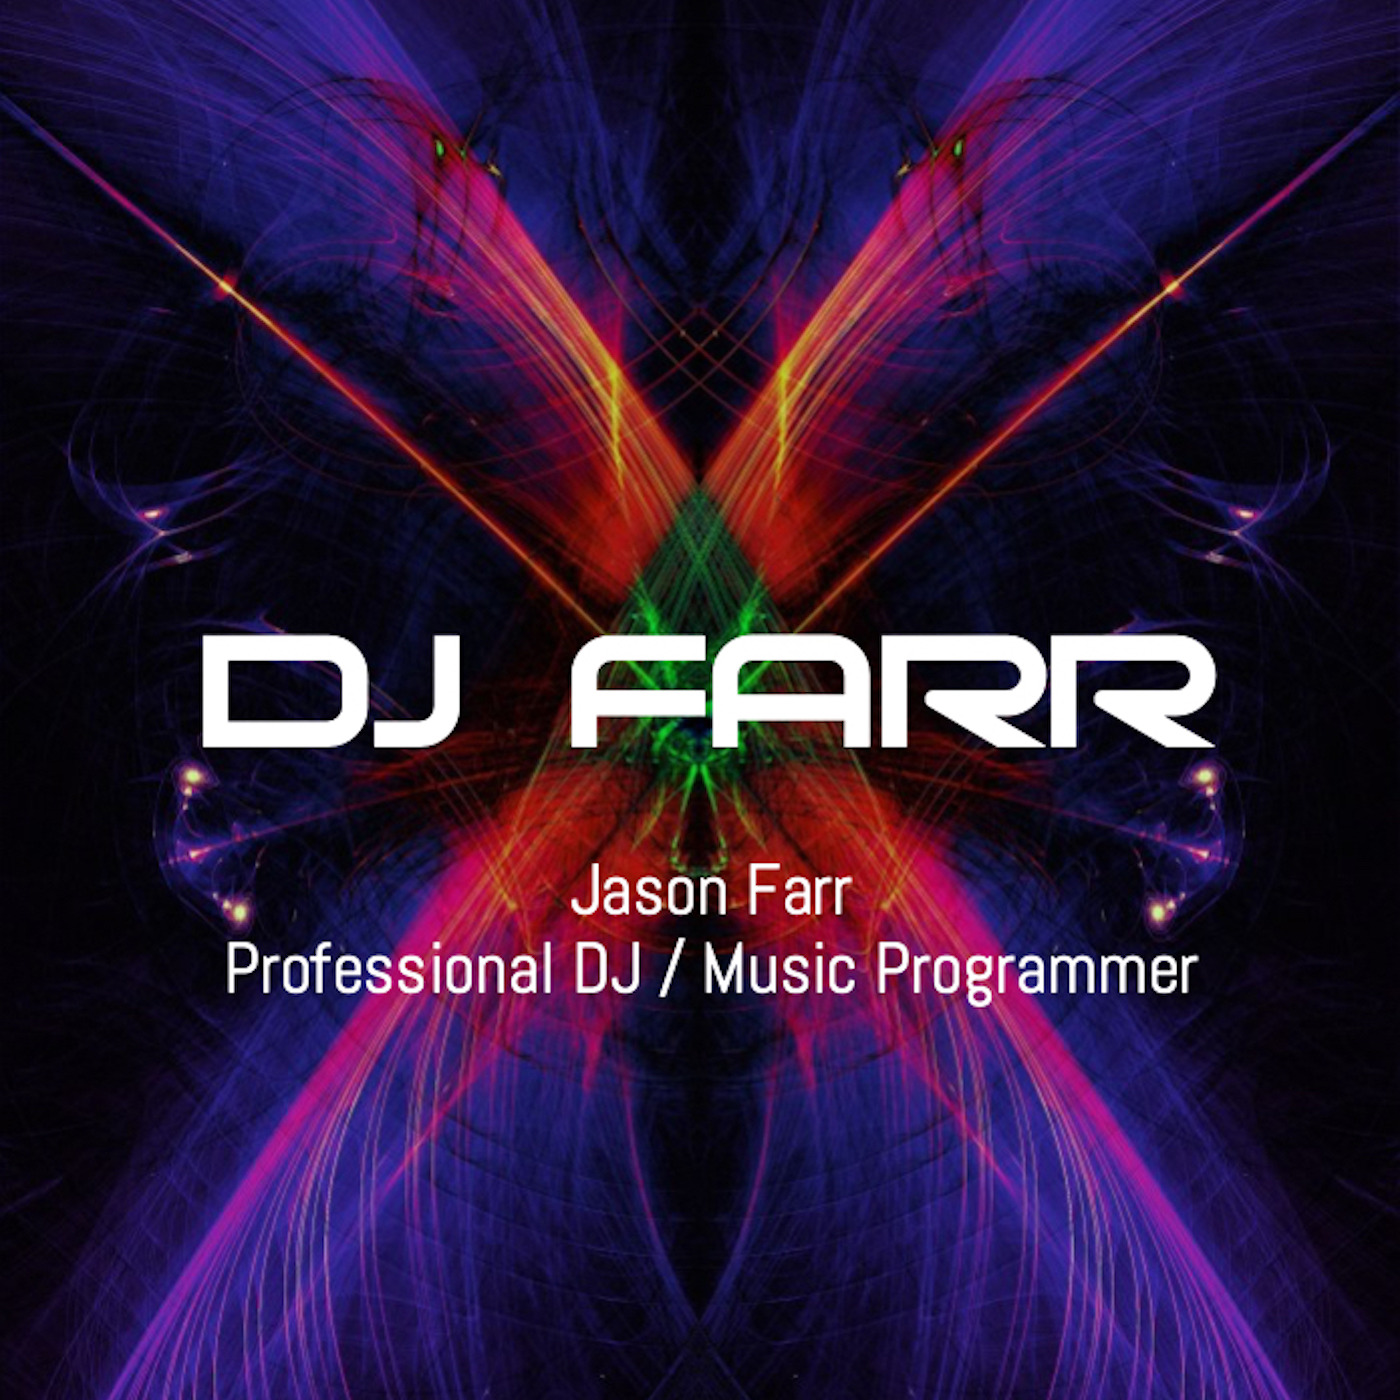 DJ FARR (soundcloud.com/jason-farr)